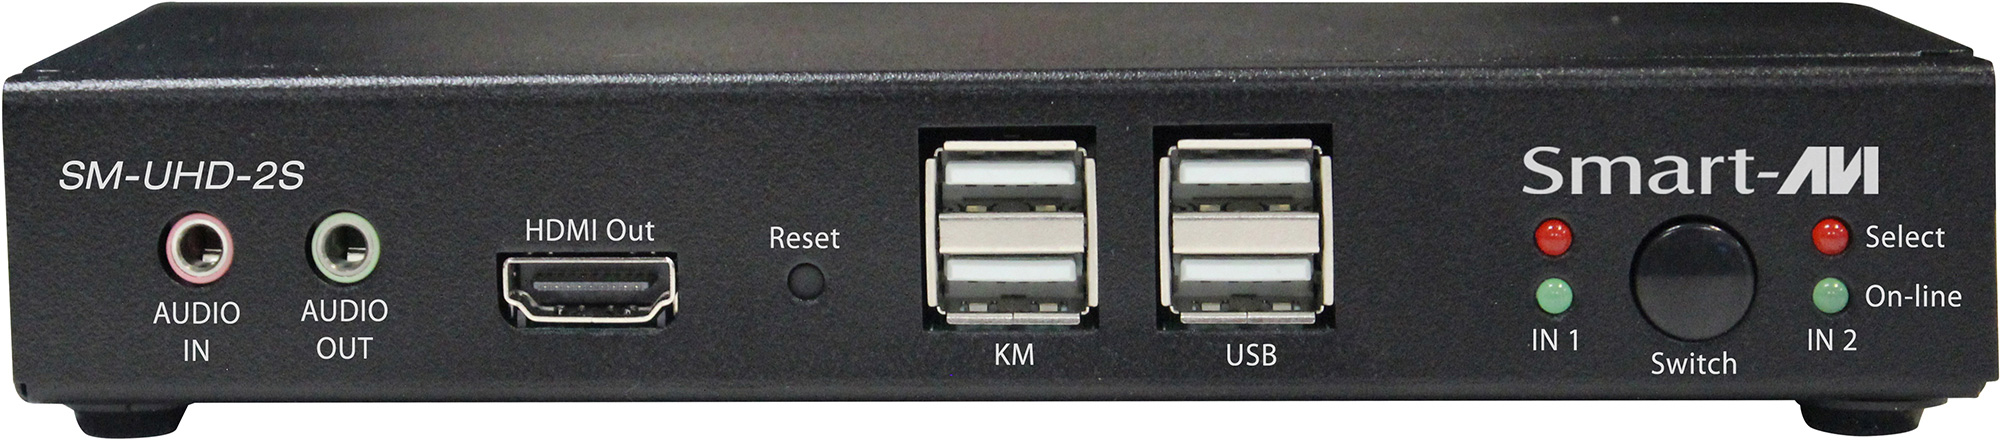 Smart AVI SM-UHD-2S HDMI KVM Switch with Audio and USB 2.0 Support - 2 Port SAVI-SM-UHD-2S